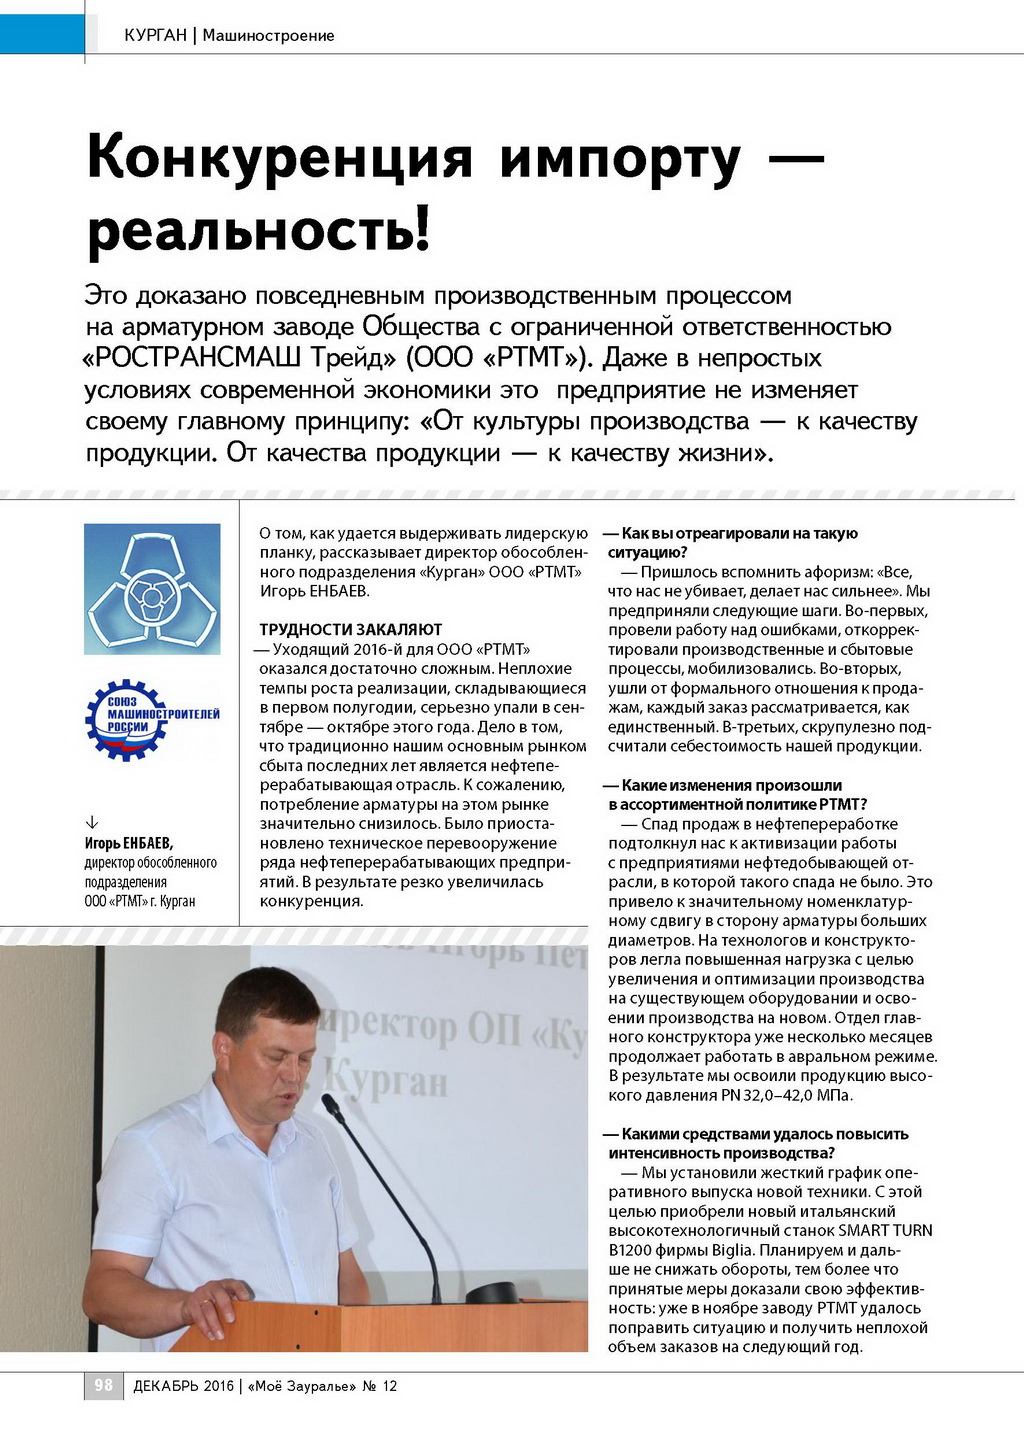 Interview of Yenbaev I.P. to the magazine "My Trans-Urals"